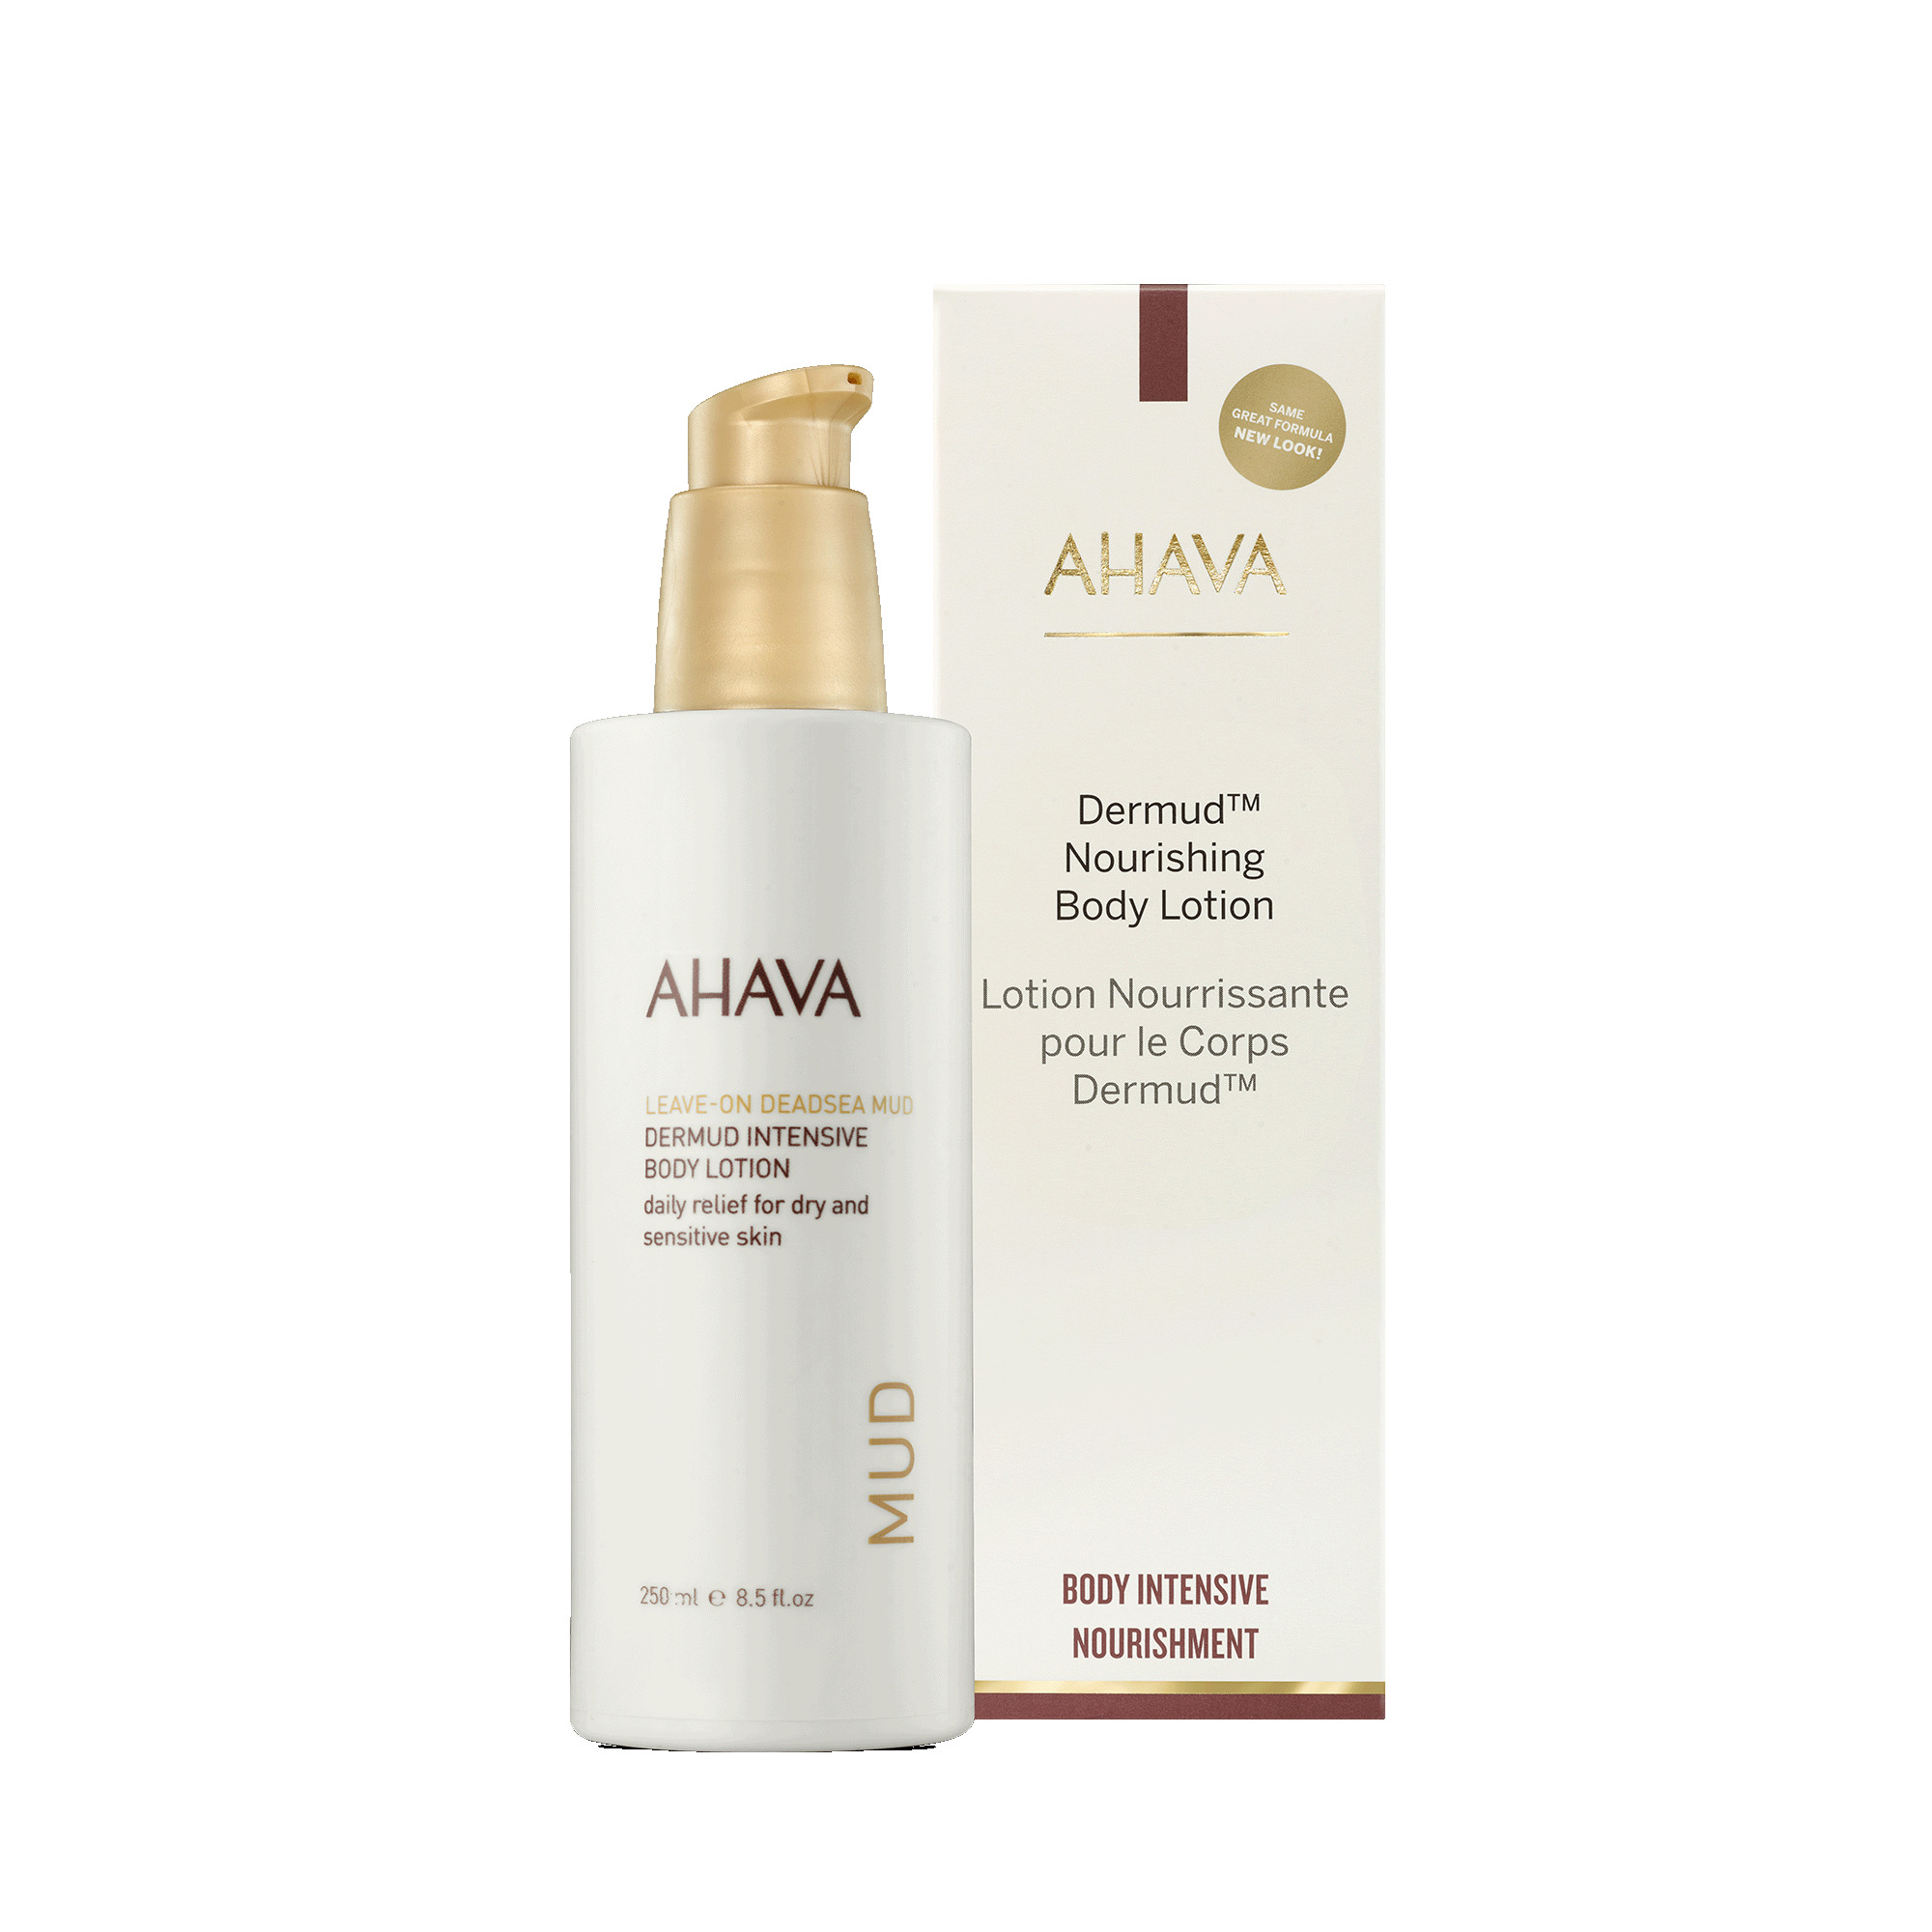 AHAVA® Dermud Intensive Dead Sea Mud Body Lotion – AHAVA Global